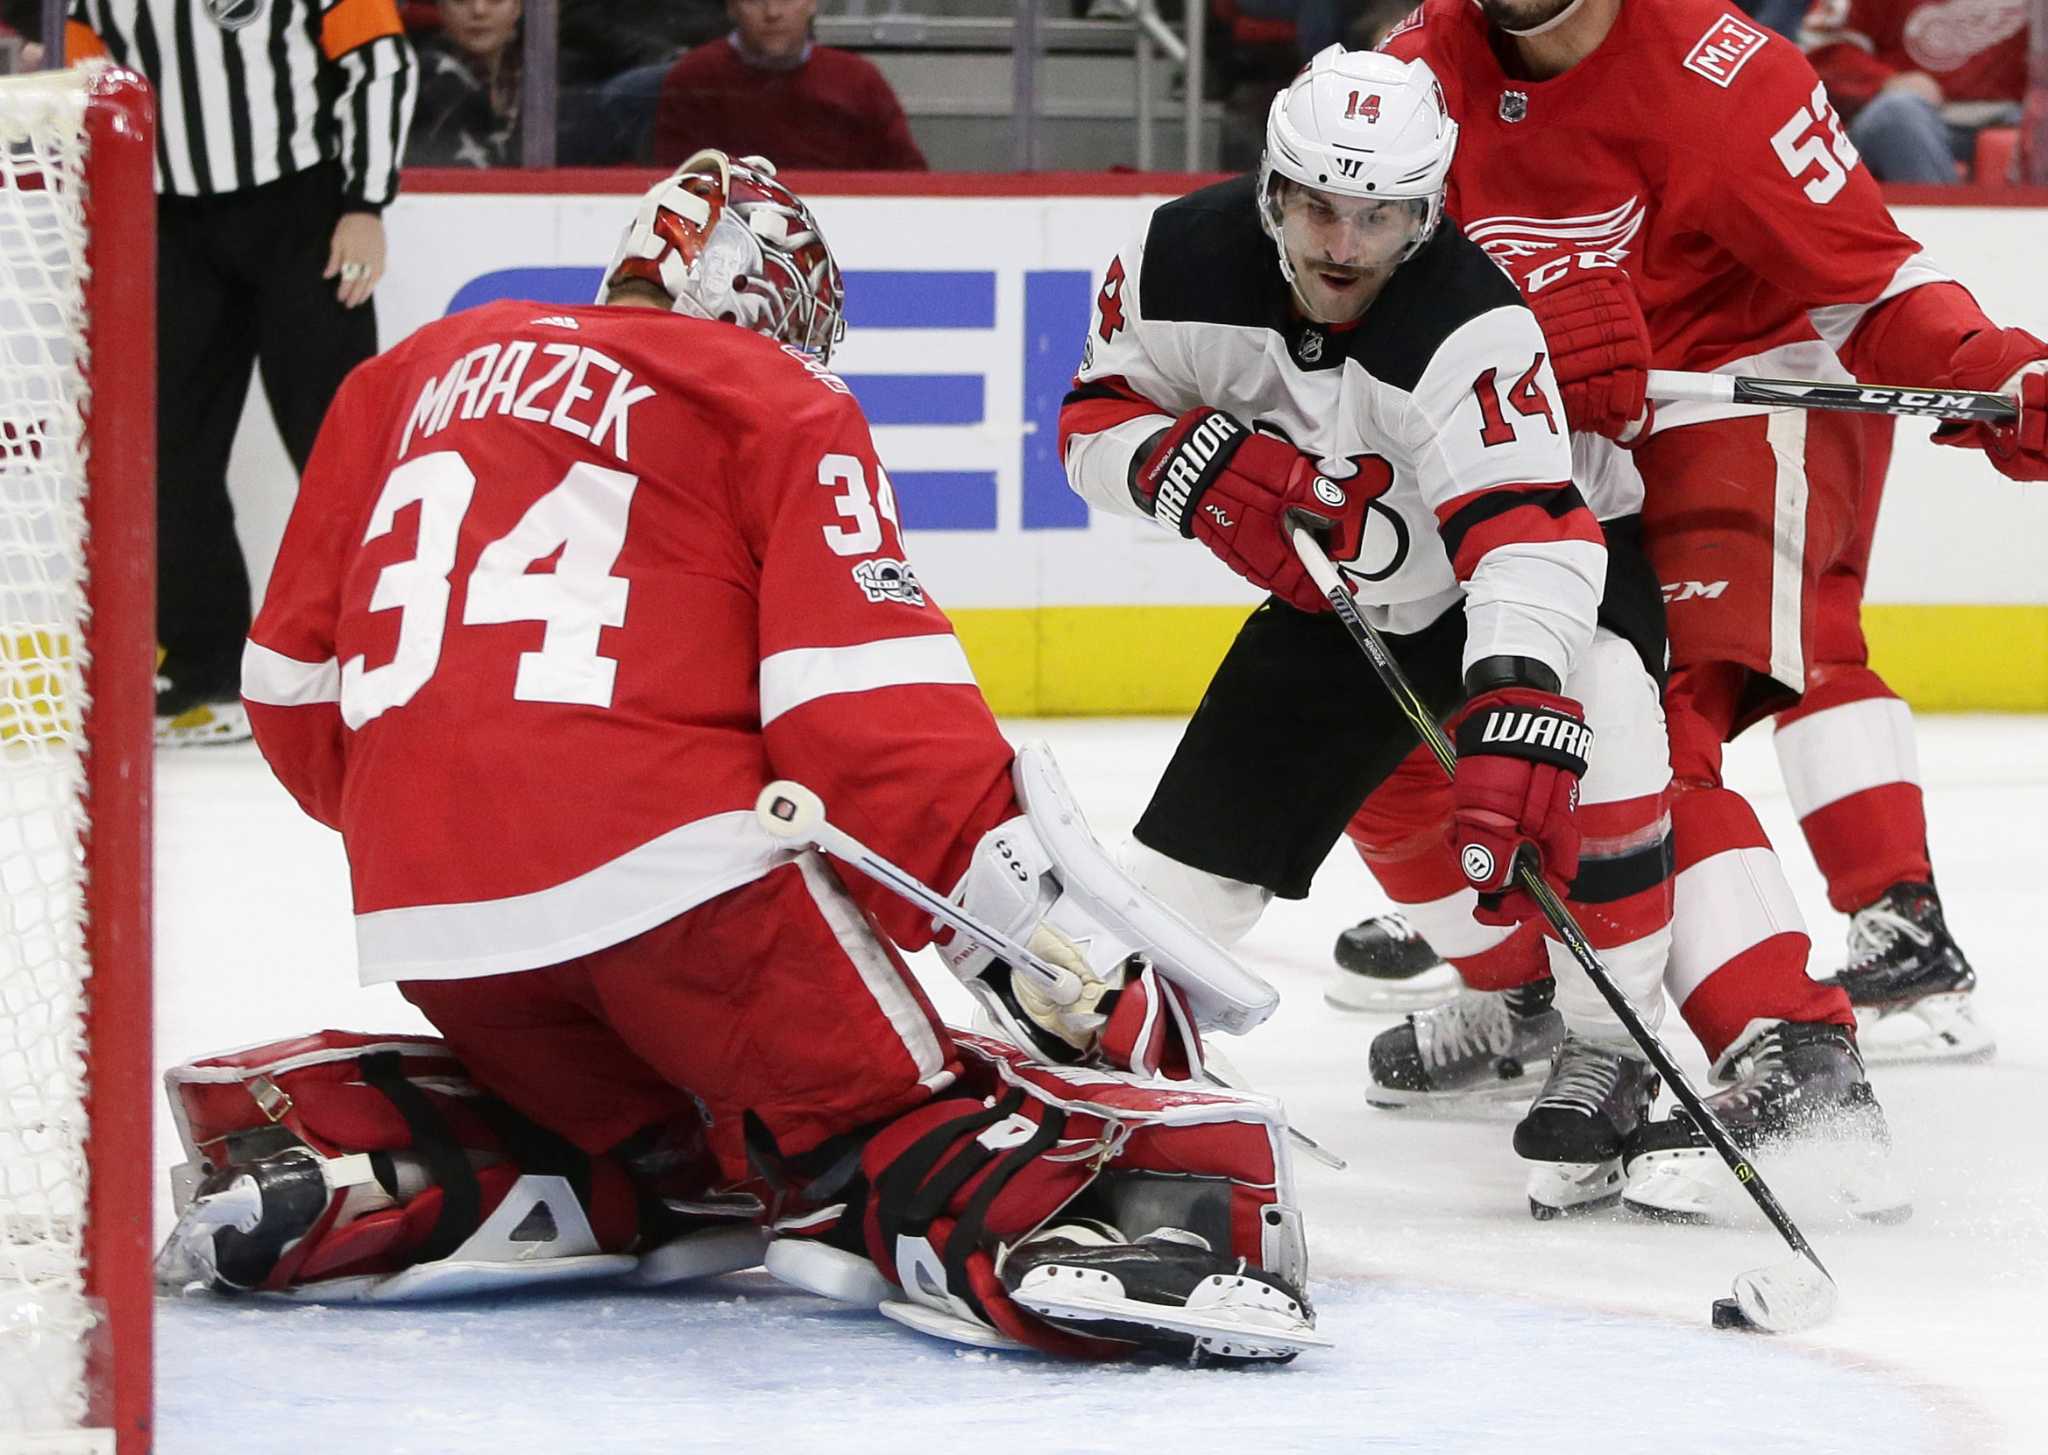 Hischier's overtime goal lifts Devils past Senators 4-3